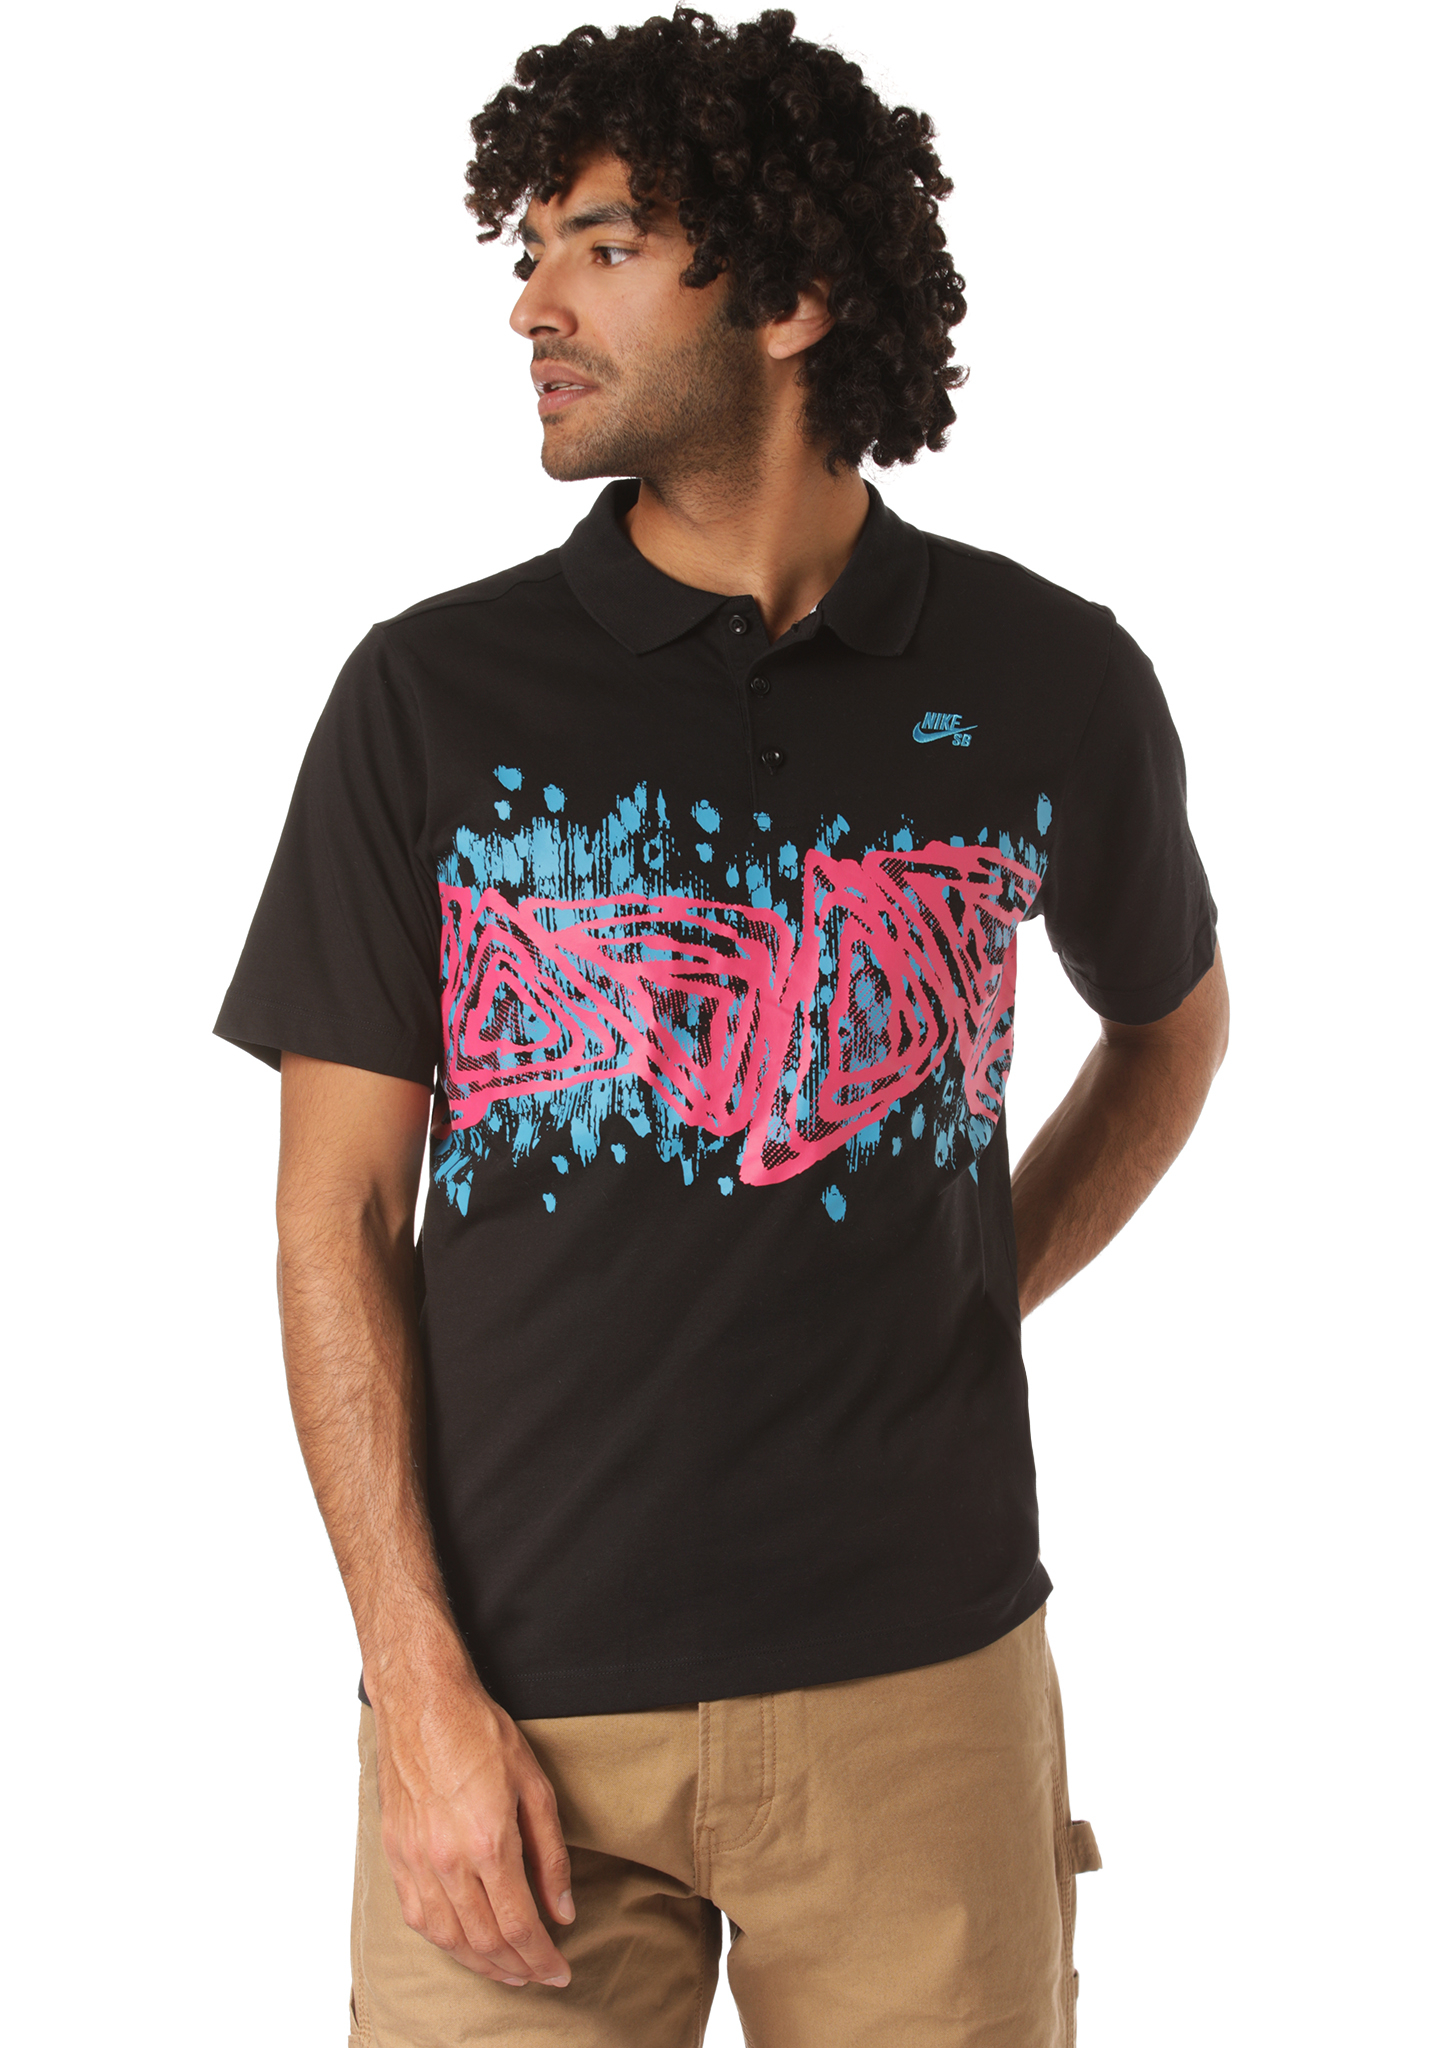 Nike Snowboarding GFX T-Shirt schwarz/wassermelone S